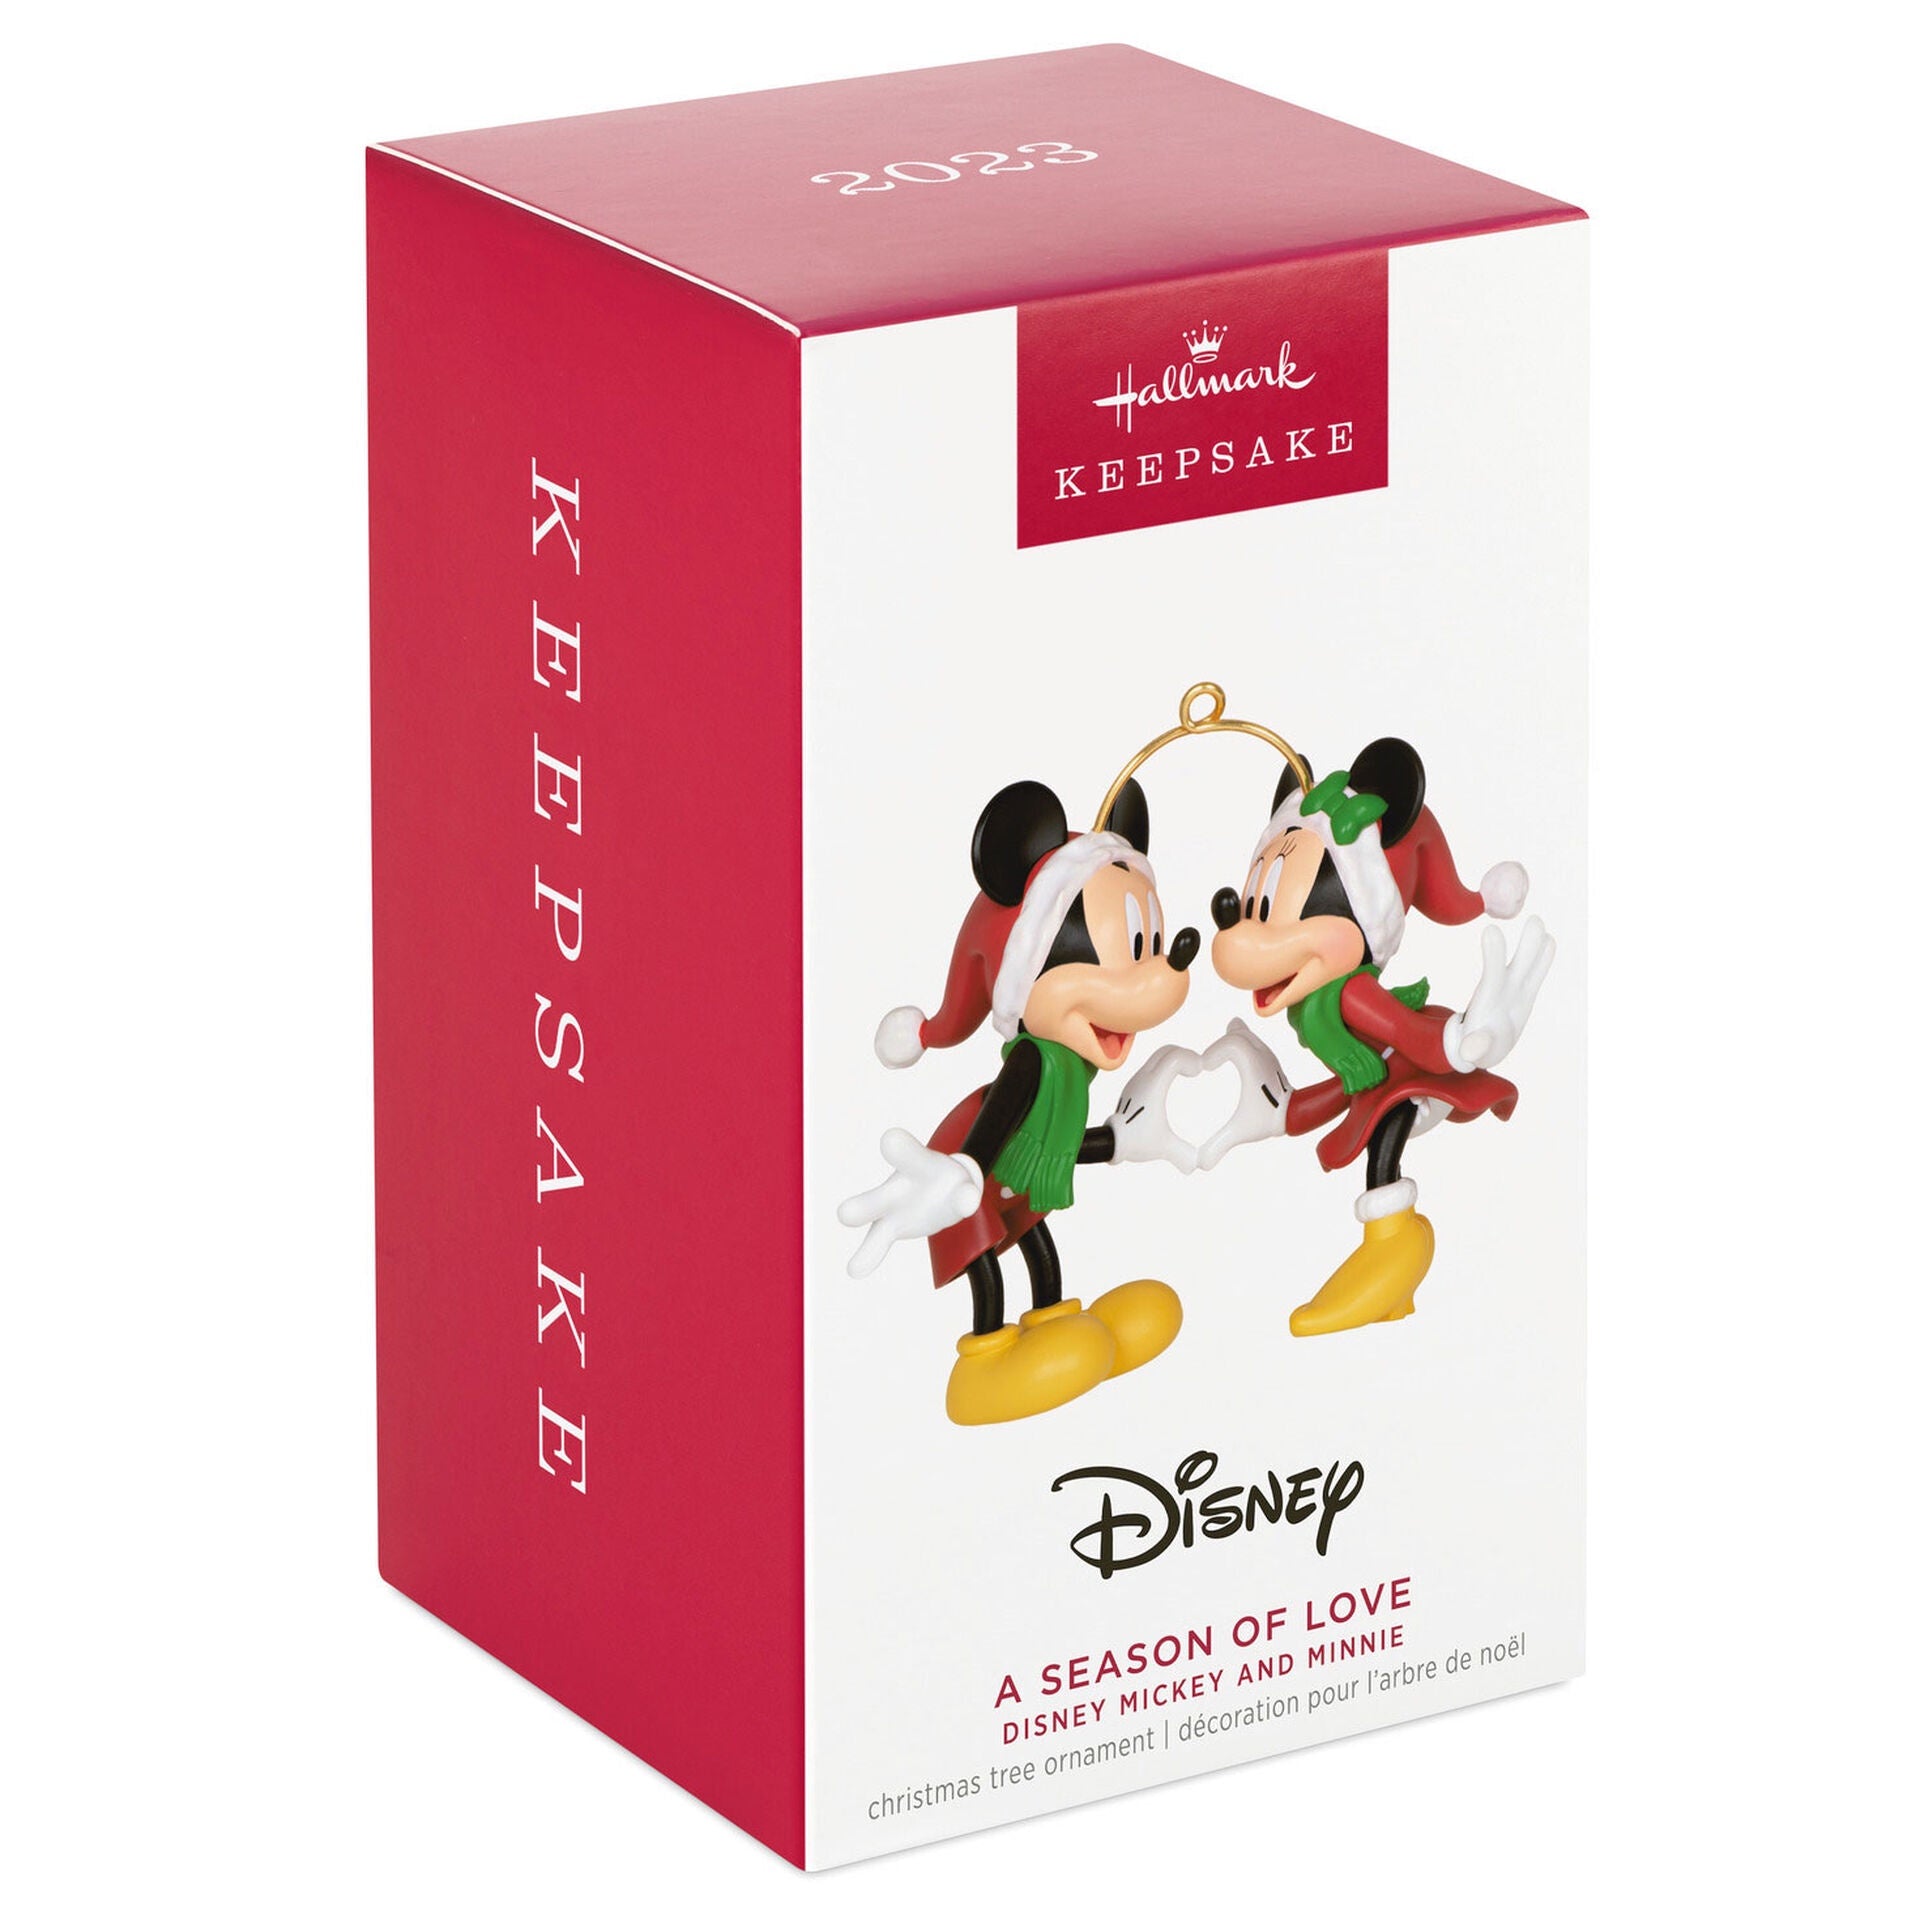 Disney Mickey and Minnie A Season of Love Ornament